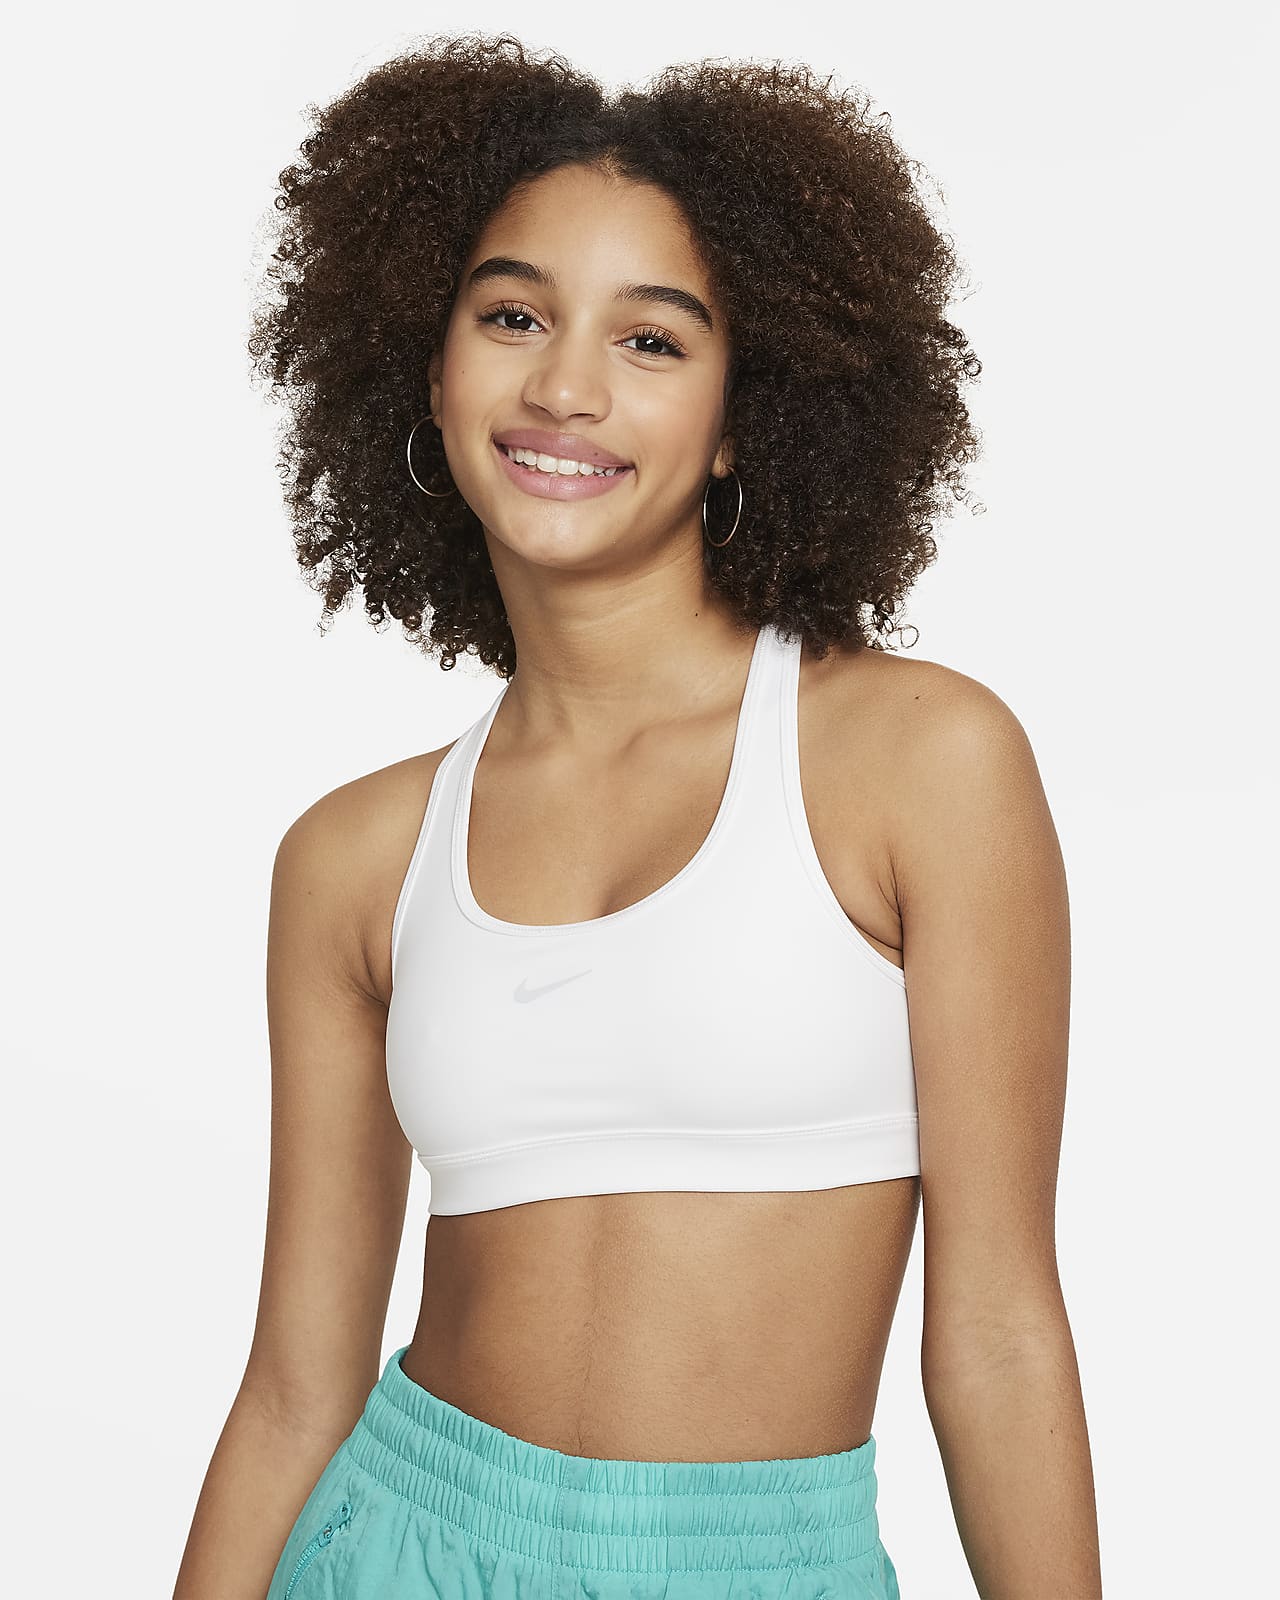 Nike swoosh big kids' (girls') sports bra, sports bras